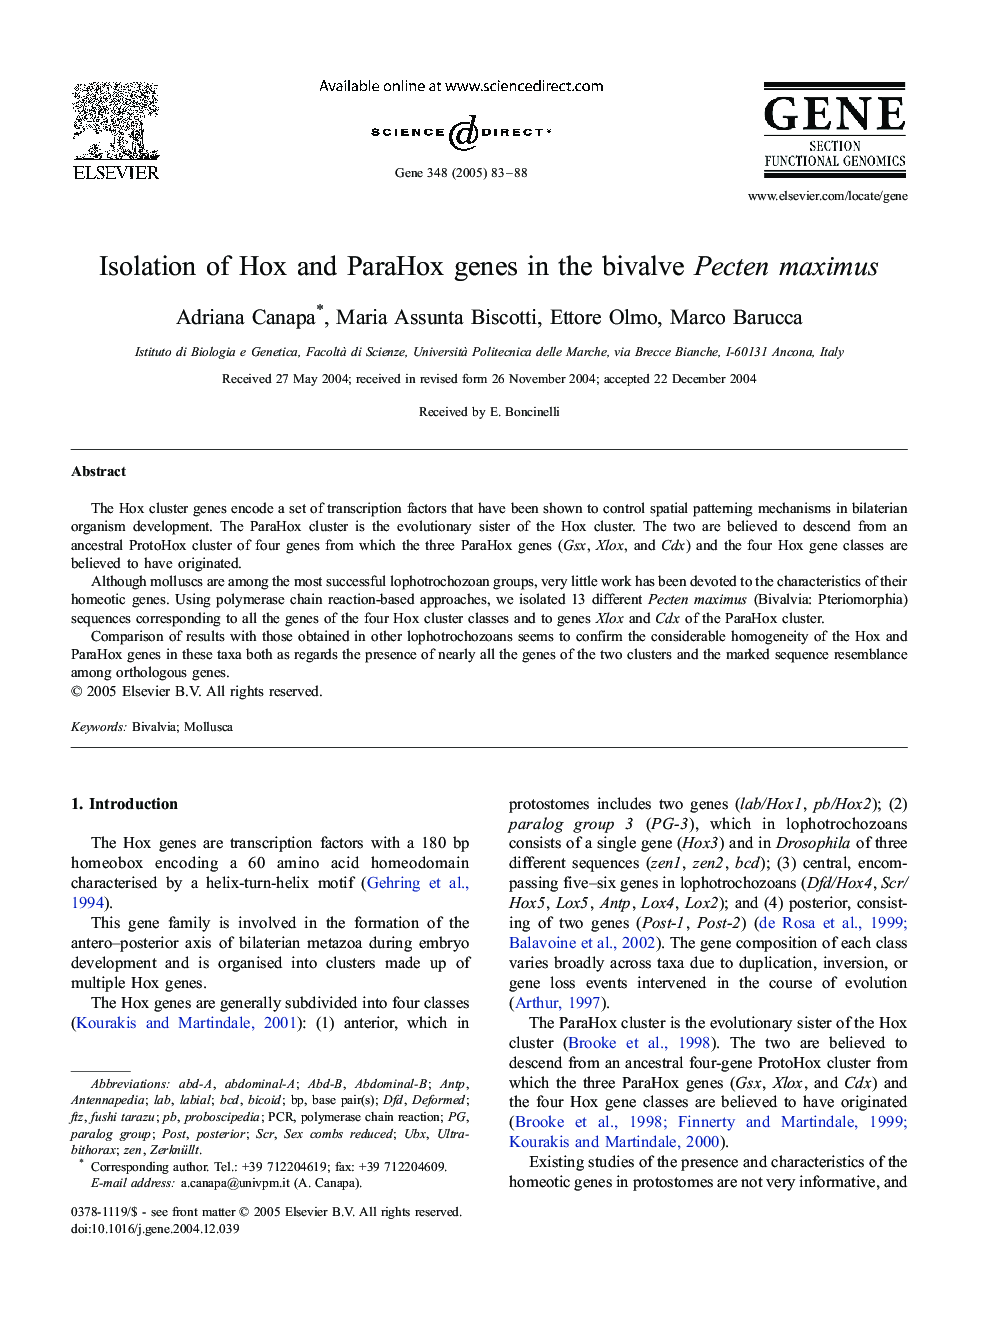 Isolation of Hox and ParaHox genes in the bivalve Pecten maximus